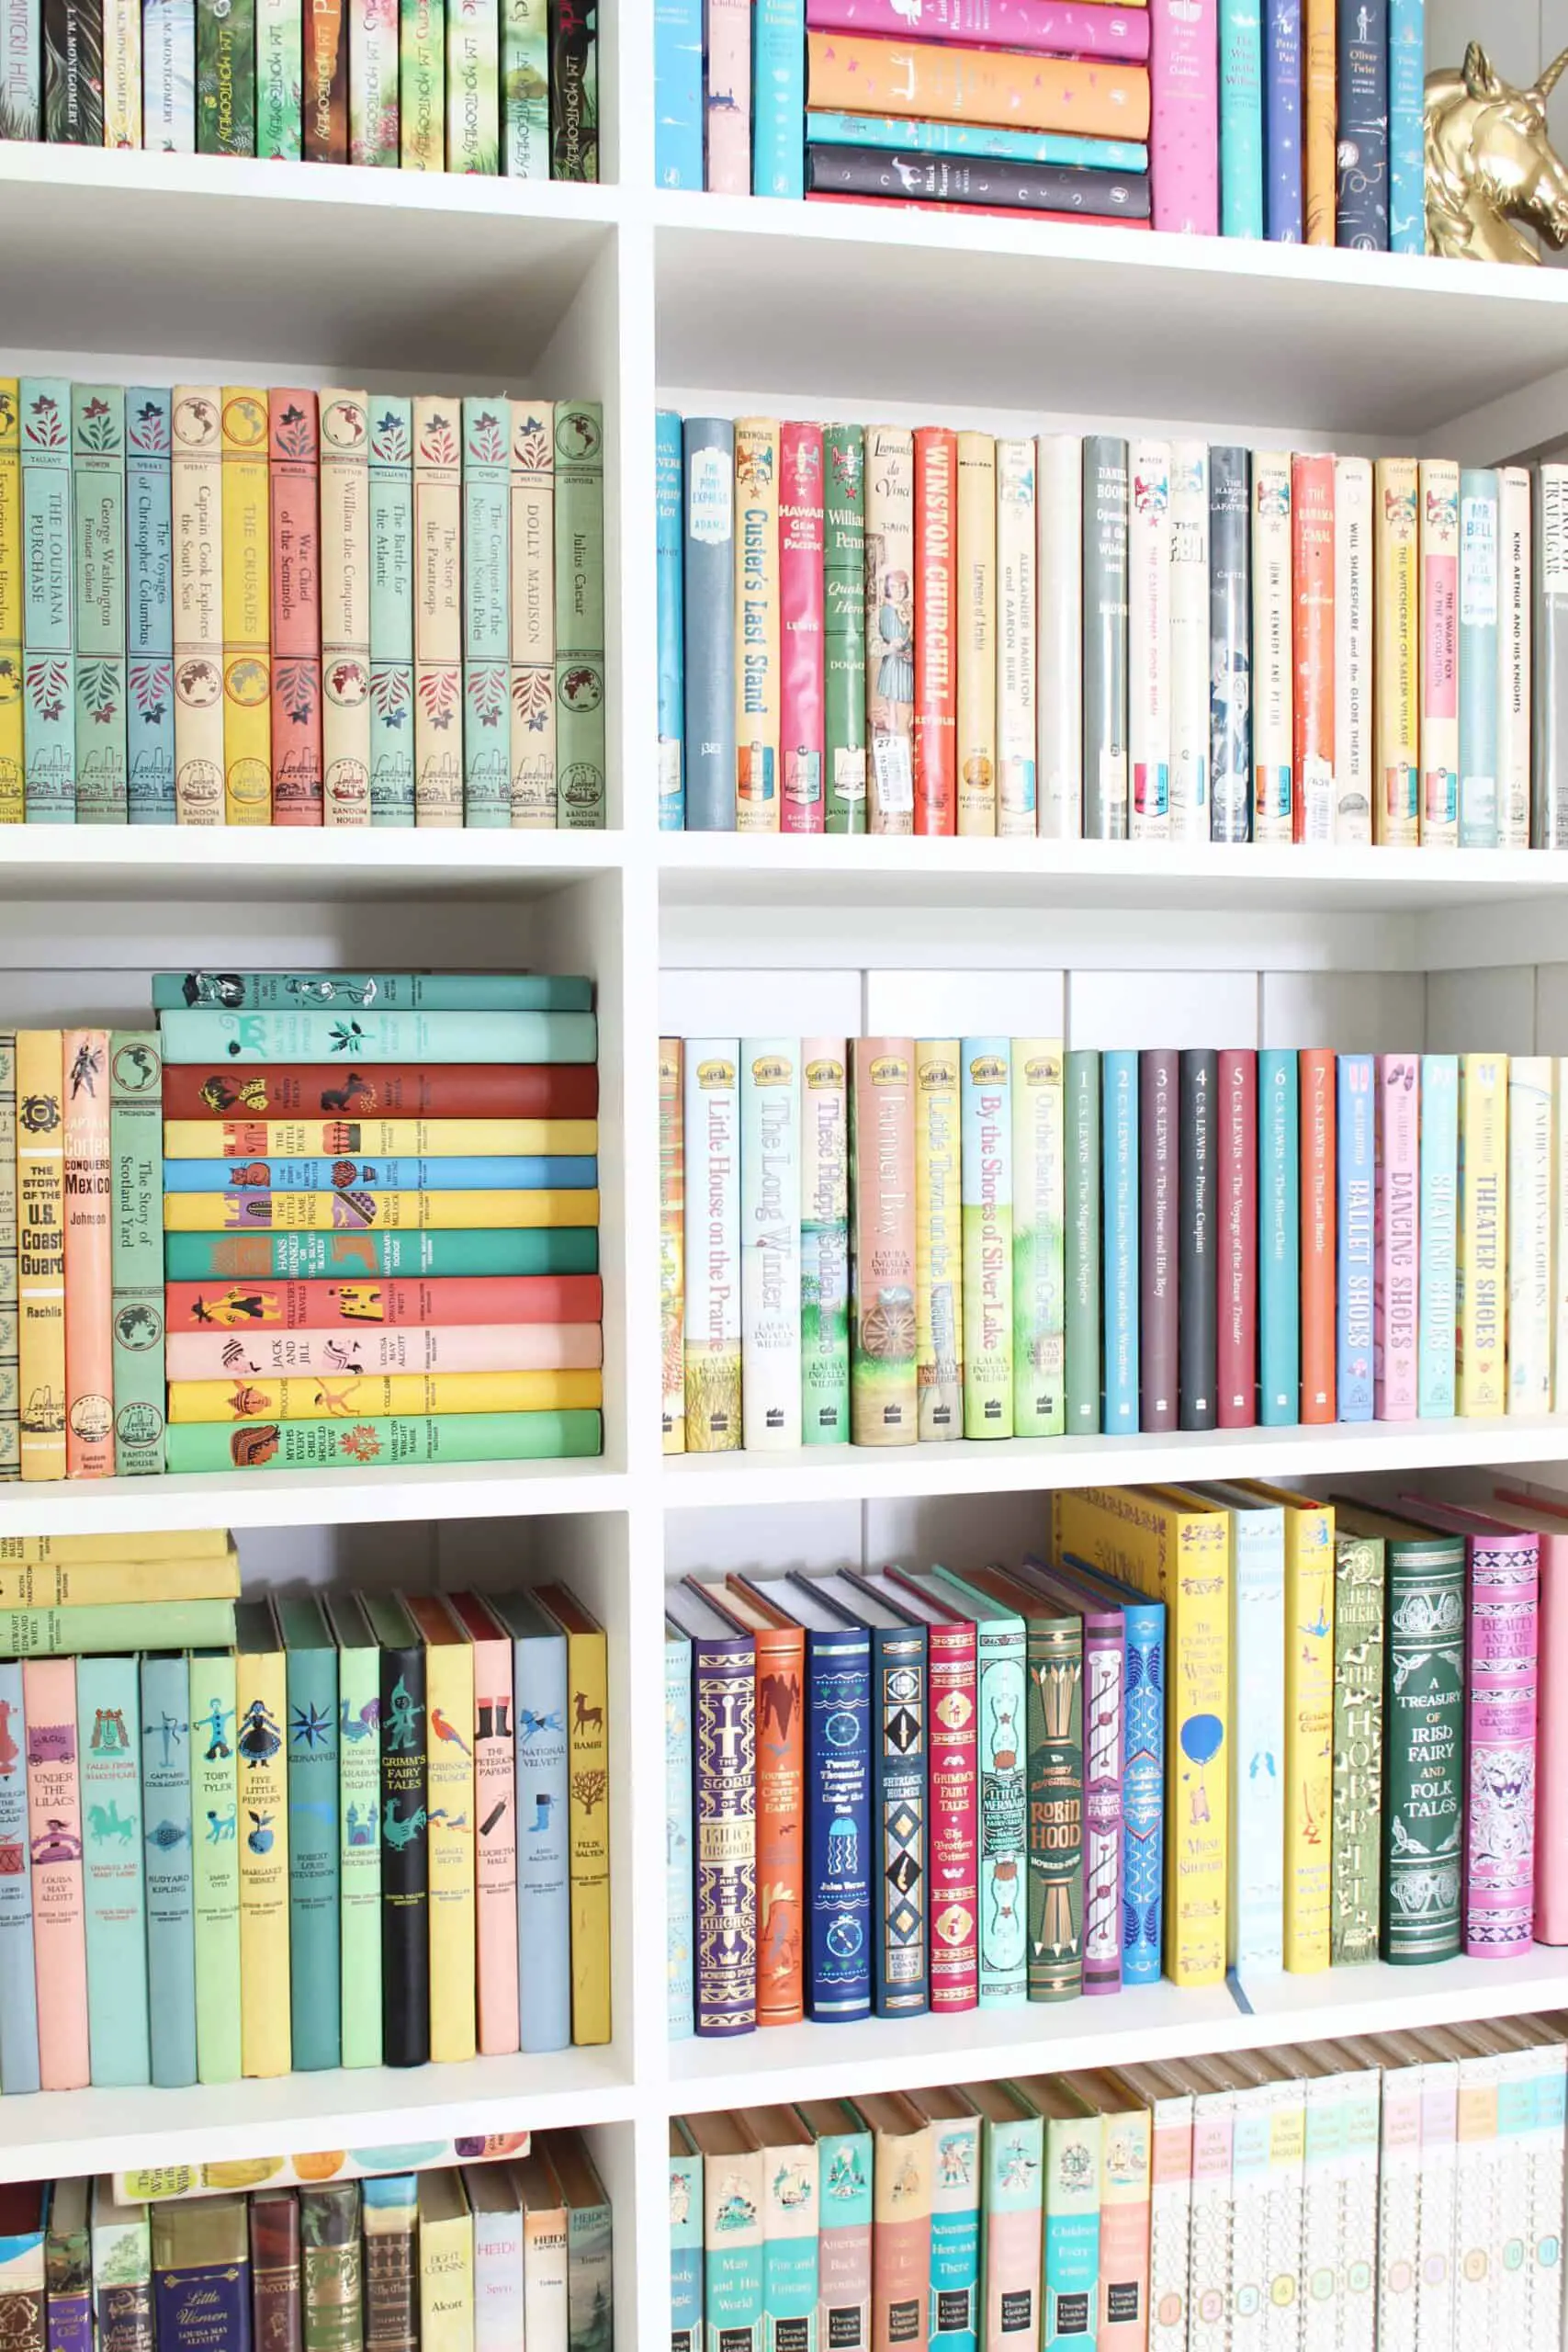 closet turned into a bookcase, landmark books, junior deluxe edition books, barnes and noble classic books